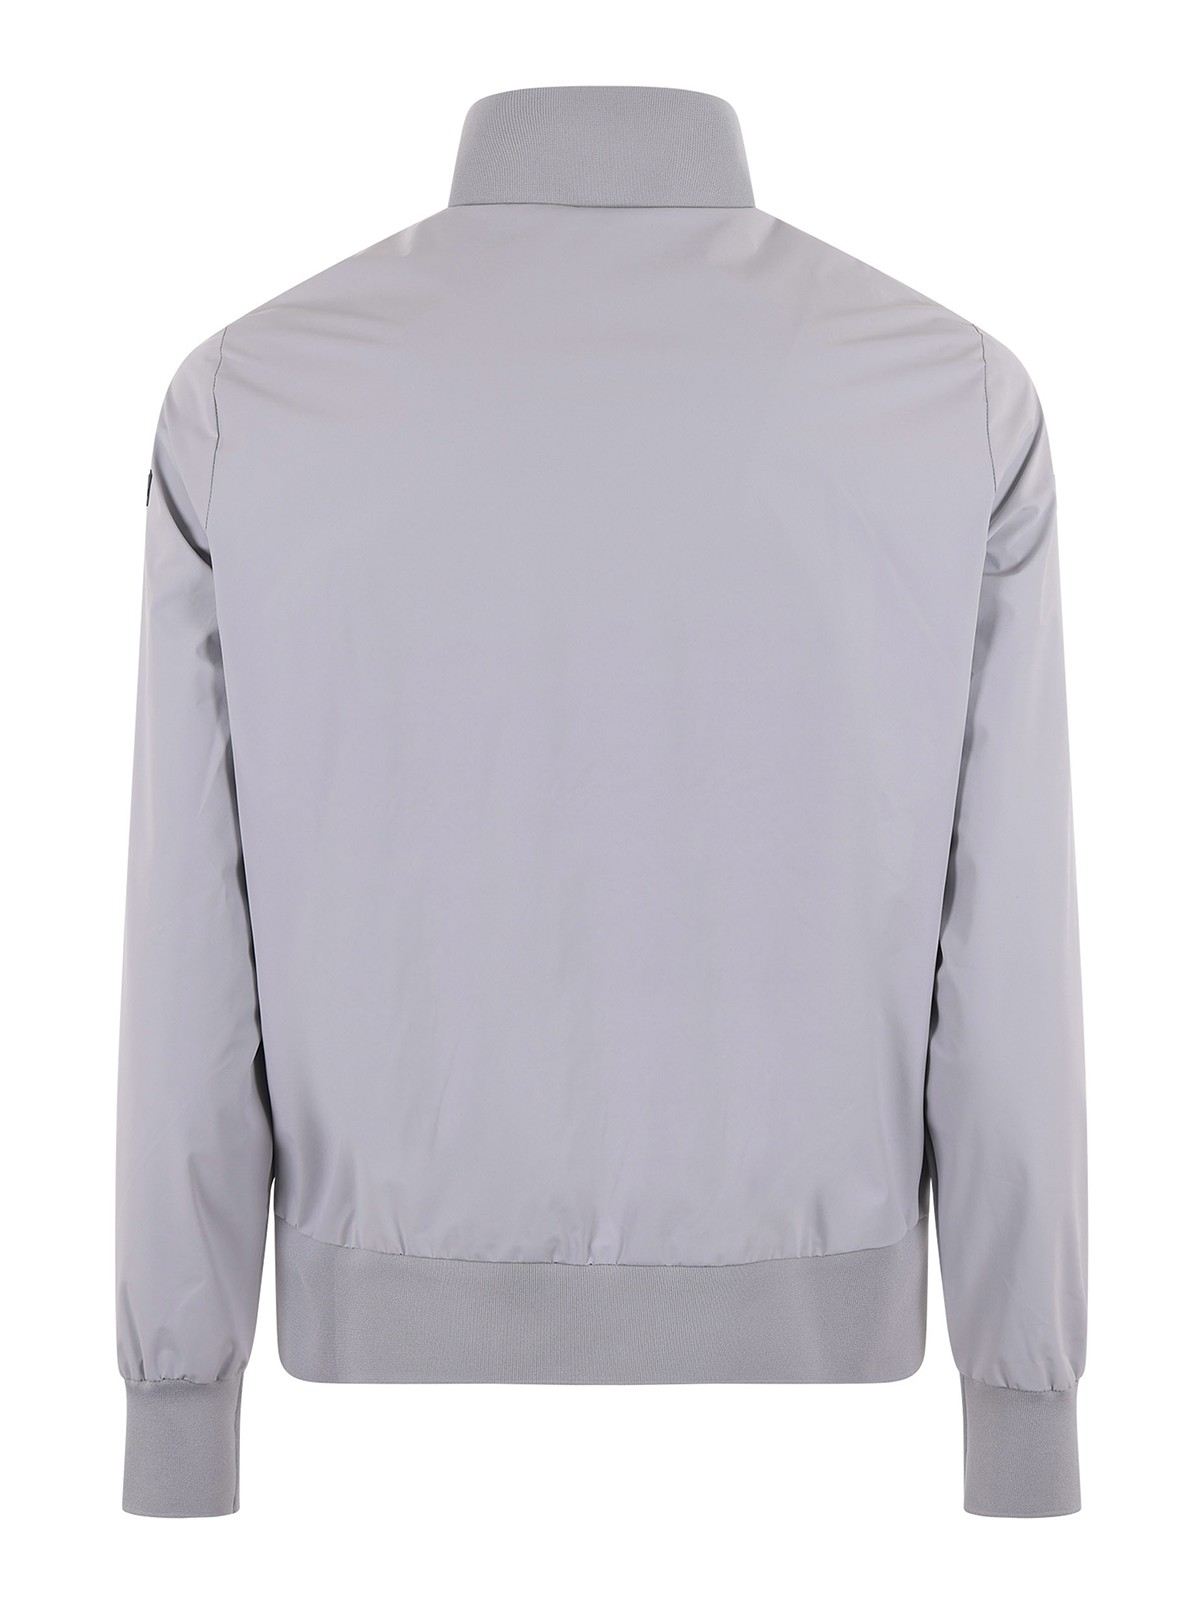 Shop Rrd Roberto Ricci Designs Blazer - Gris Claro In Light Grey